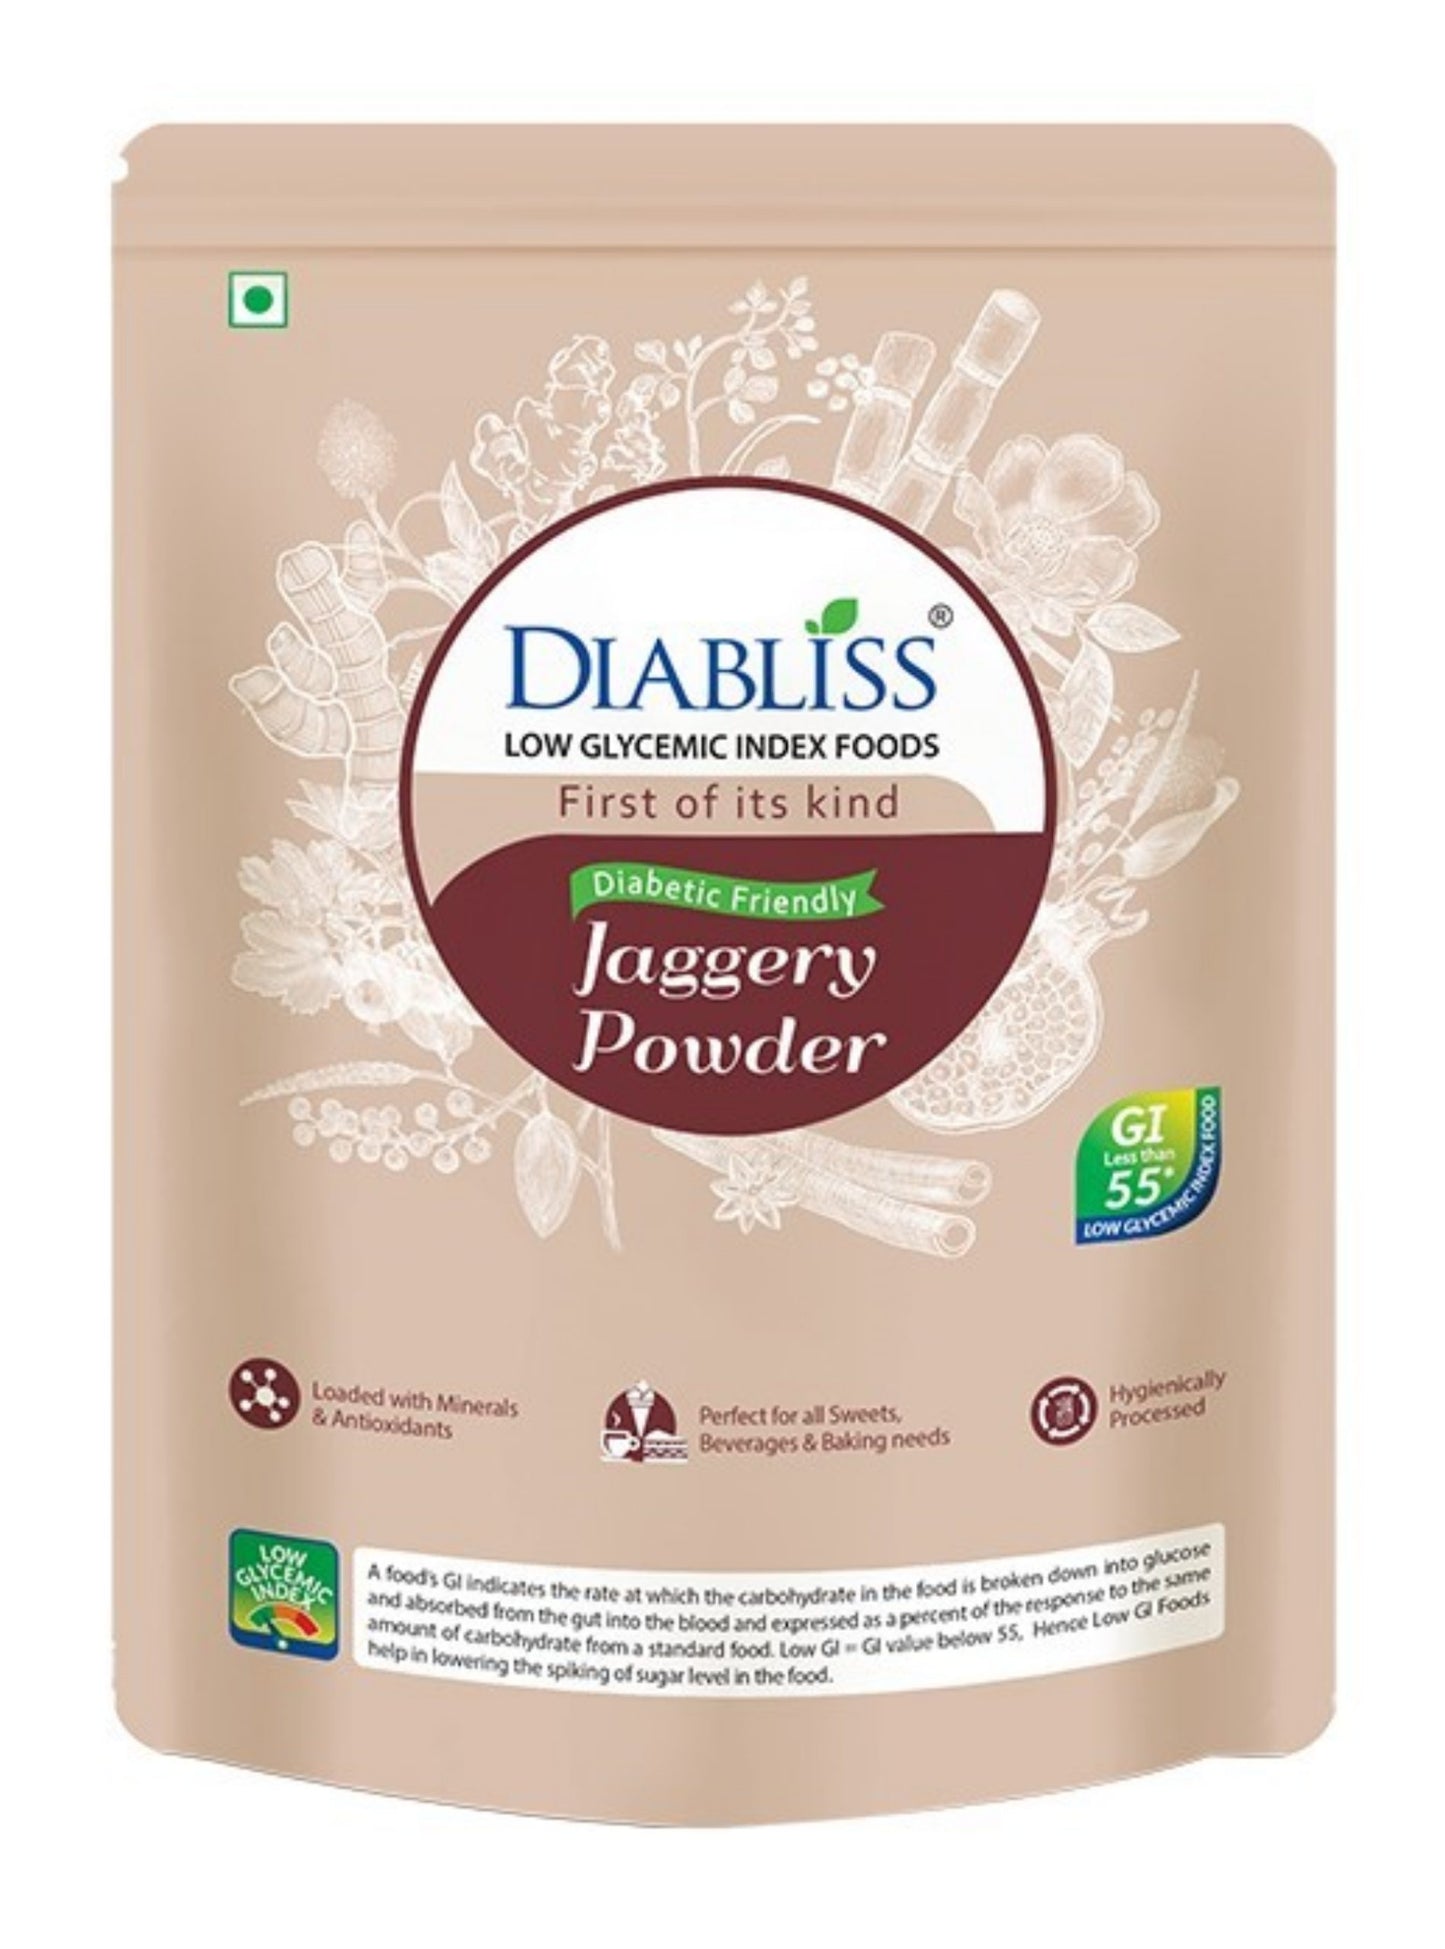 Diabliss Diabetic Friendly Sugar 5kg Bag - Get Free Diabliss Jaggery Powder 500g Pouch